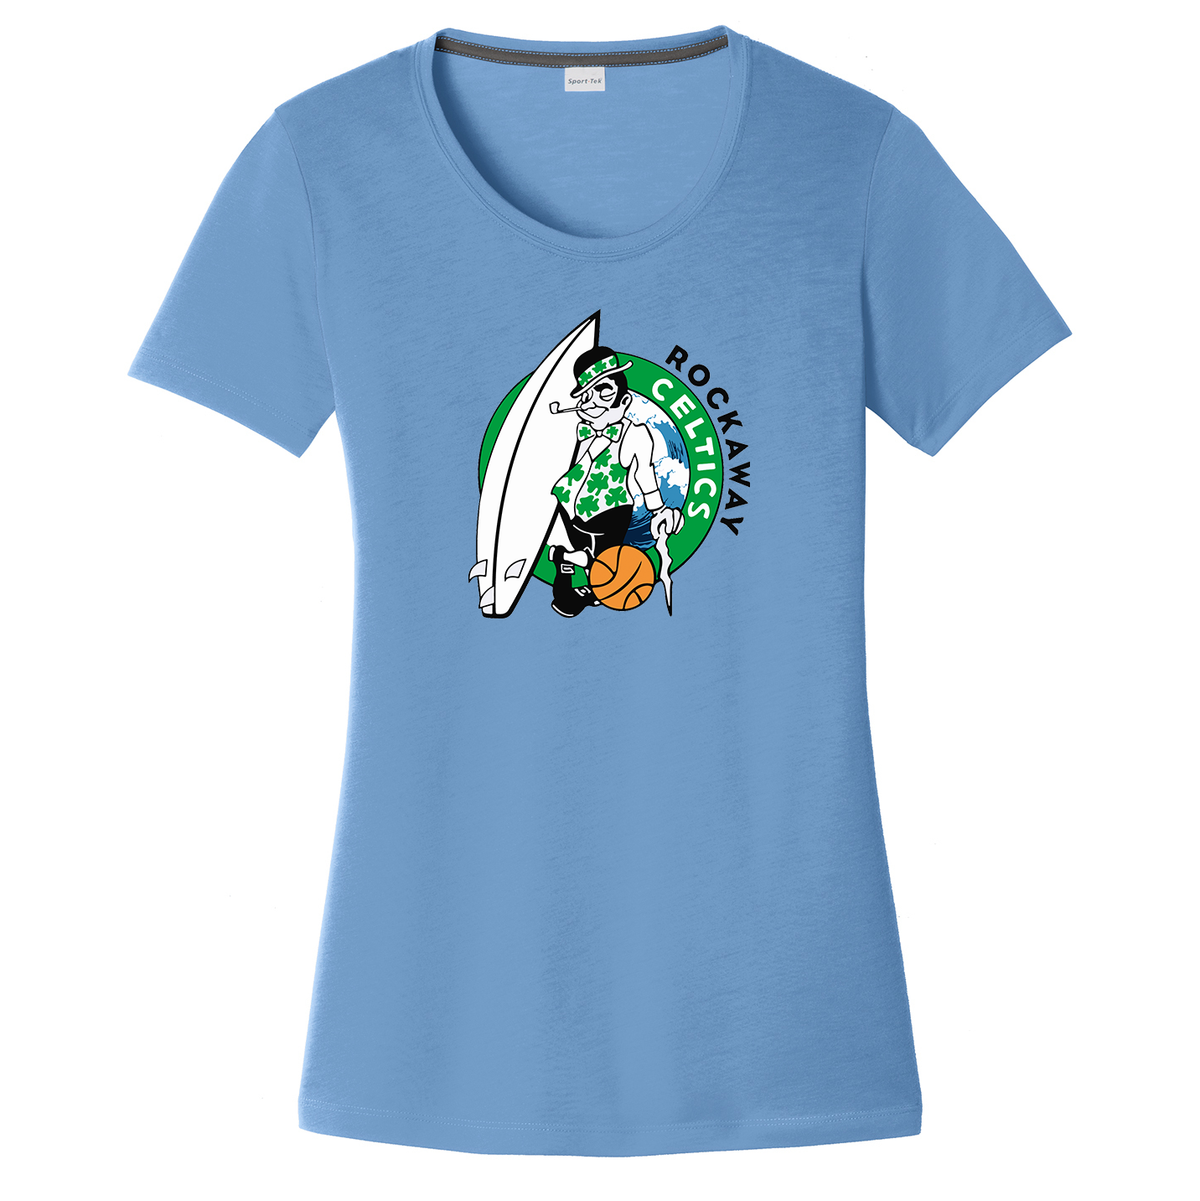 Rockaway Celtics Women's CottonTouch Performance T-Shirt